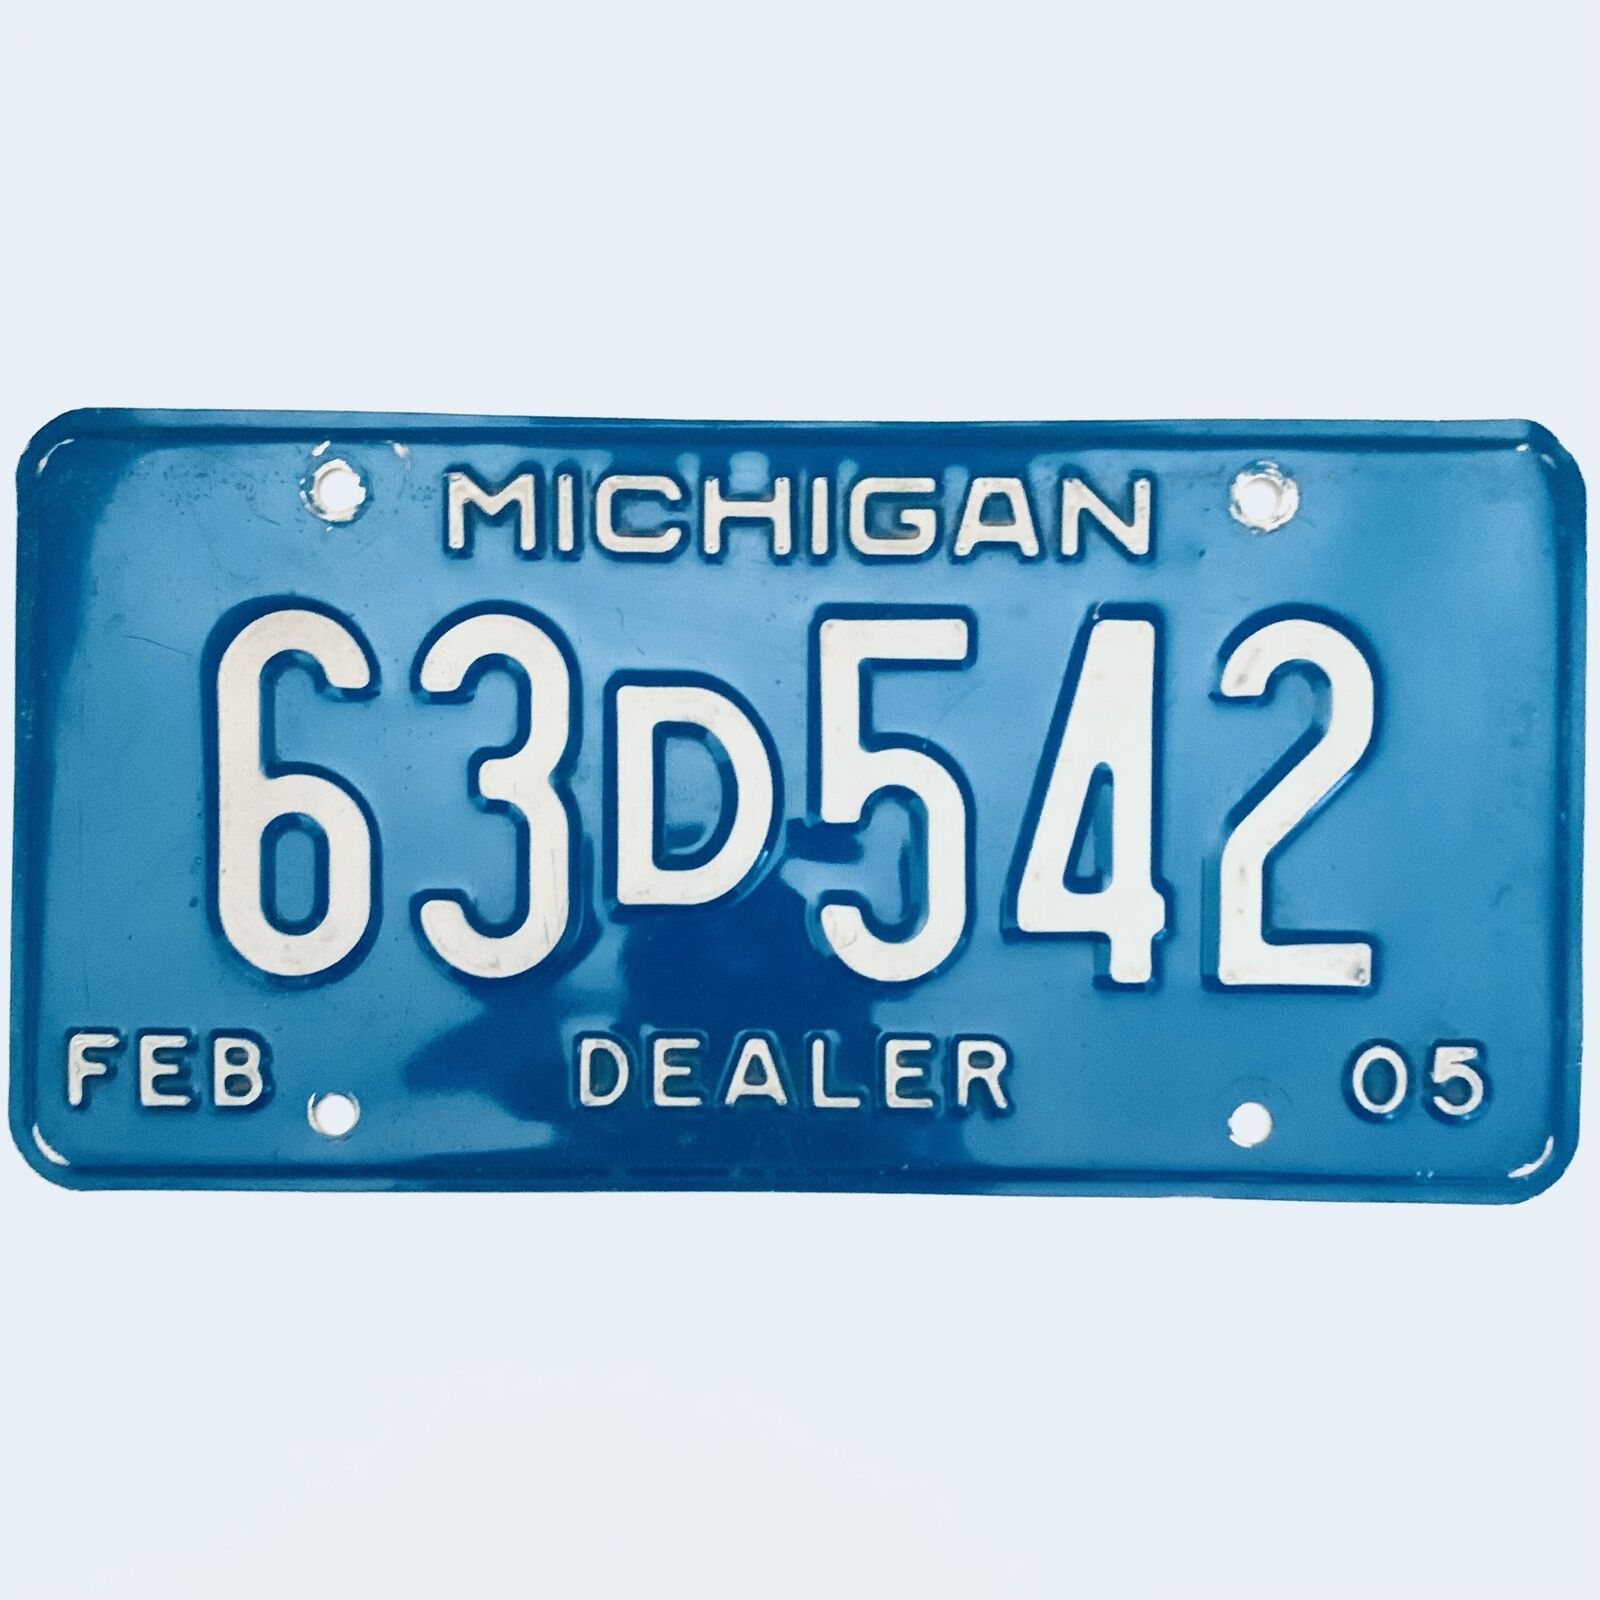 2005 United States Michigan Base Dealer License Plate 63D542